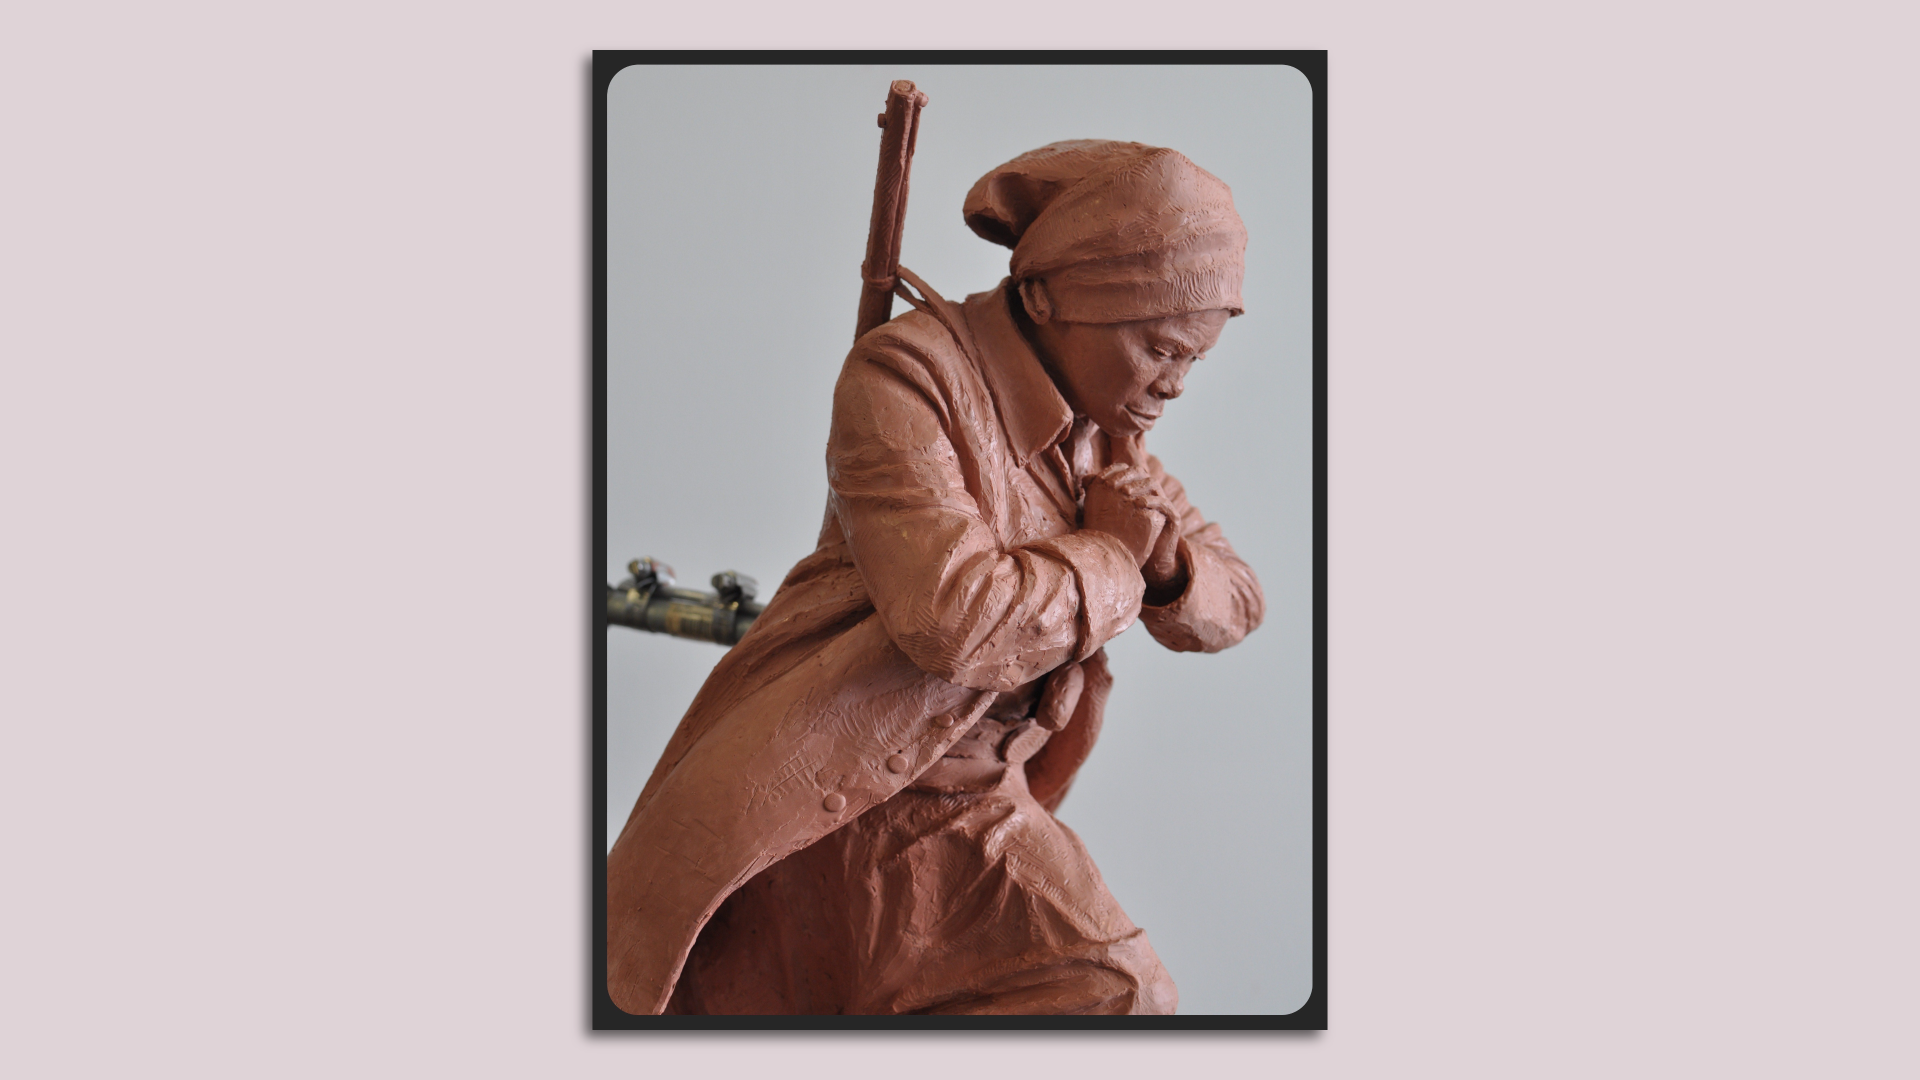 Alvin Pettit's design proposal for a Harriet Tubman statue